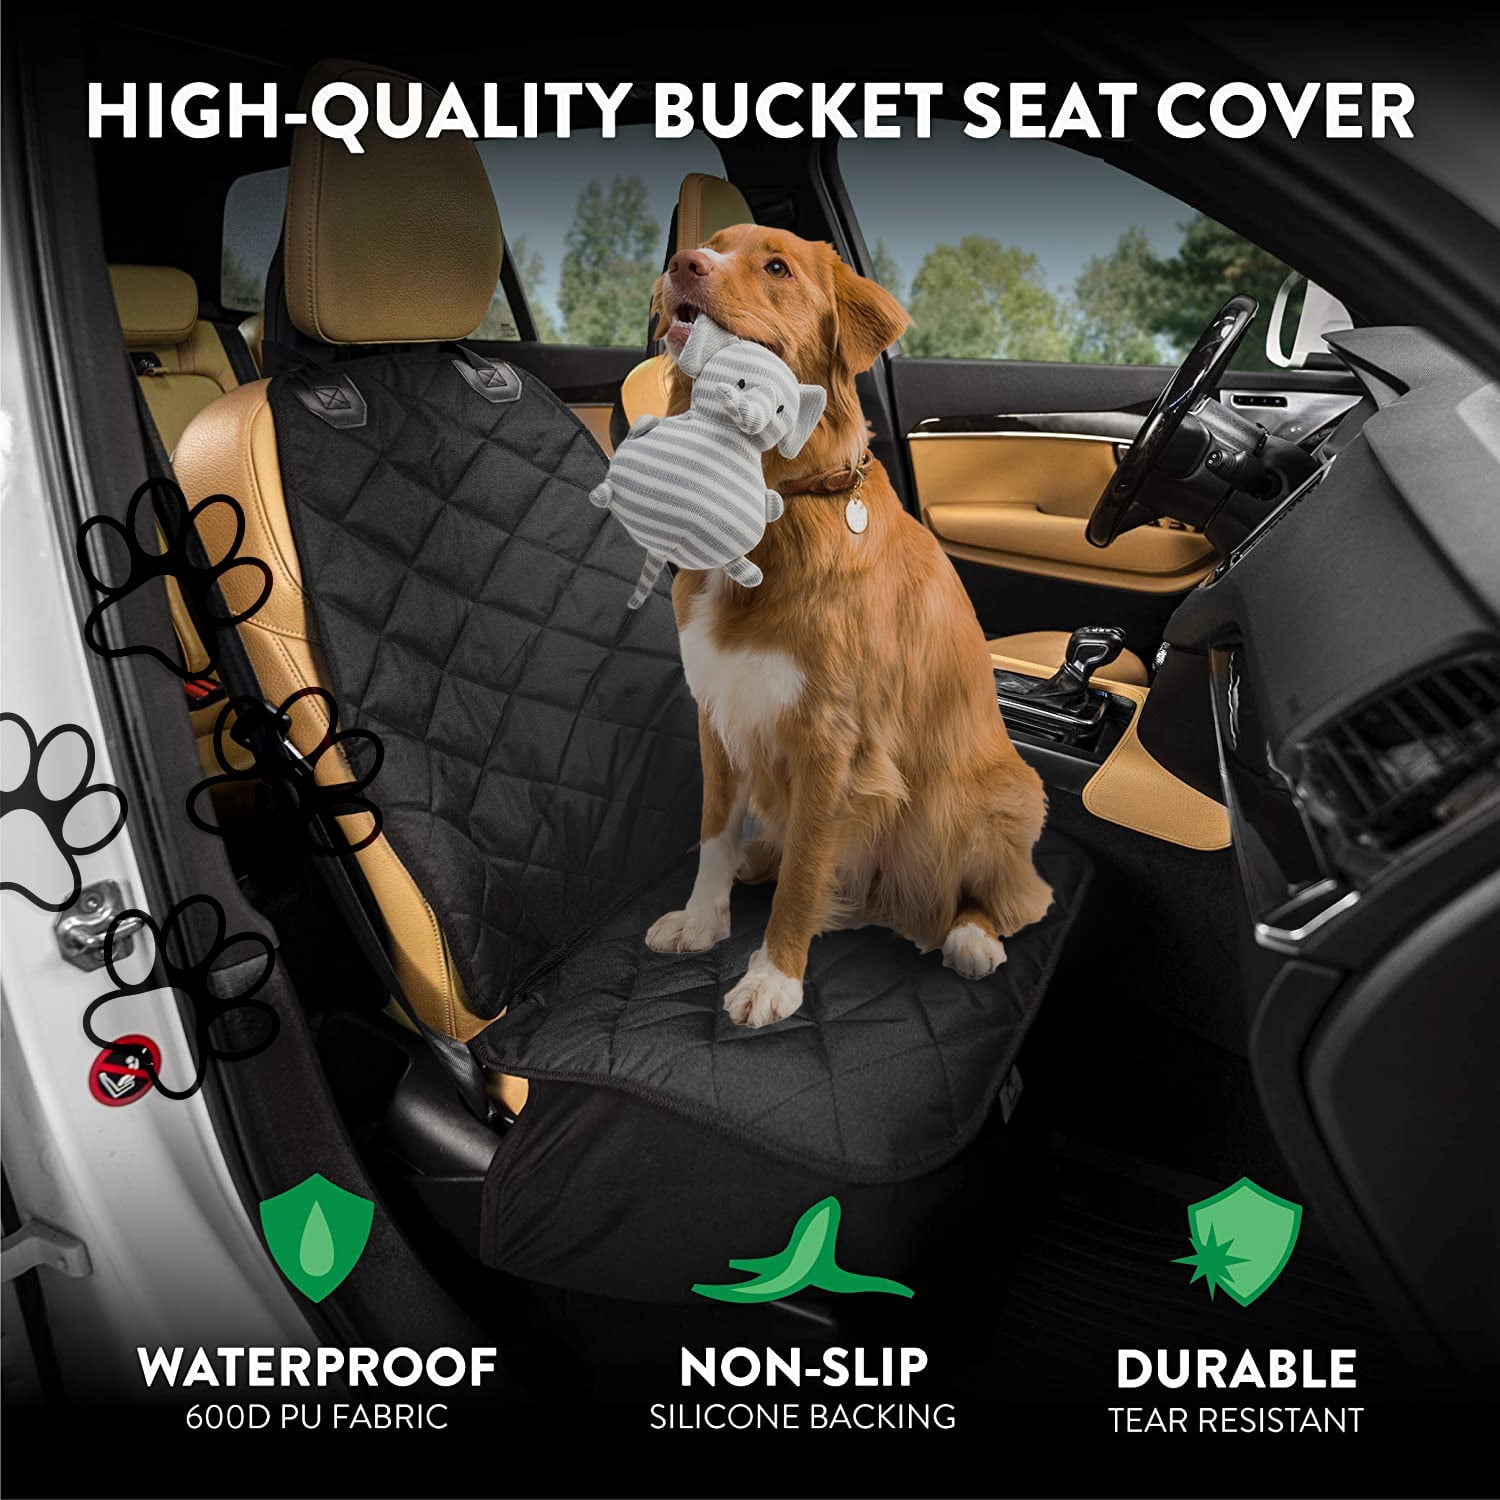 Plush Paws Products Pet Car Seat Cover XL - Black